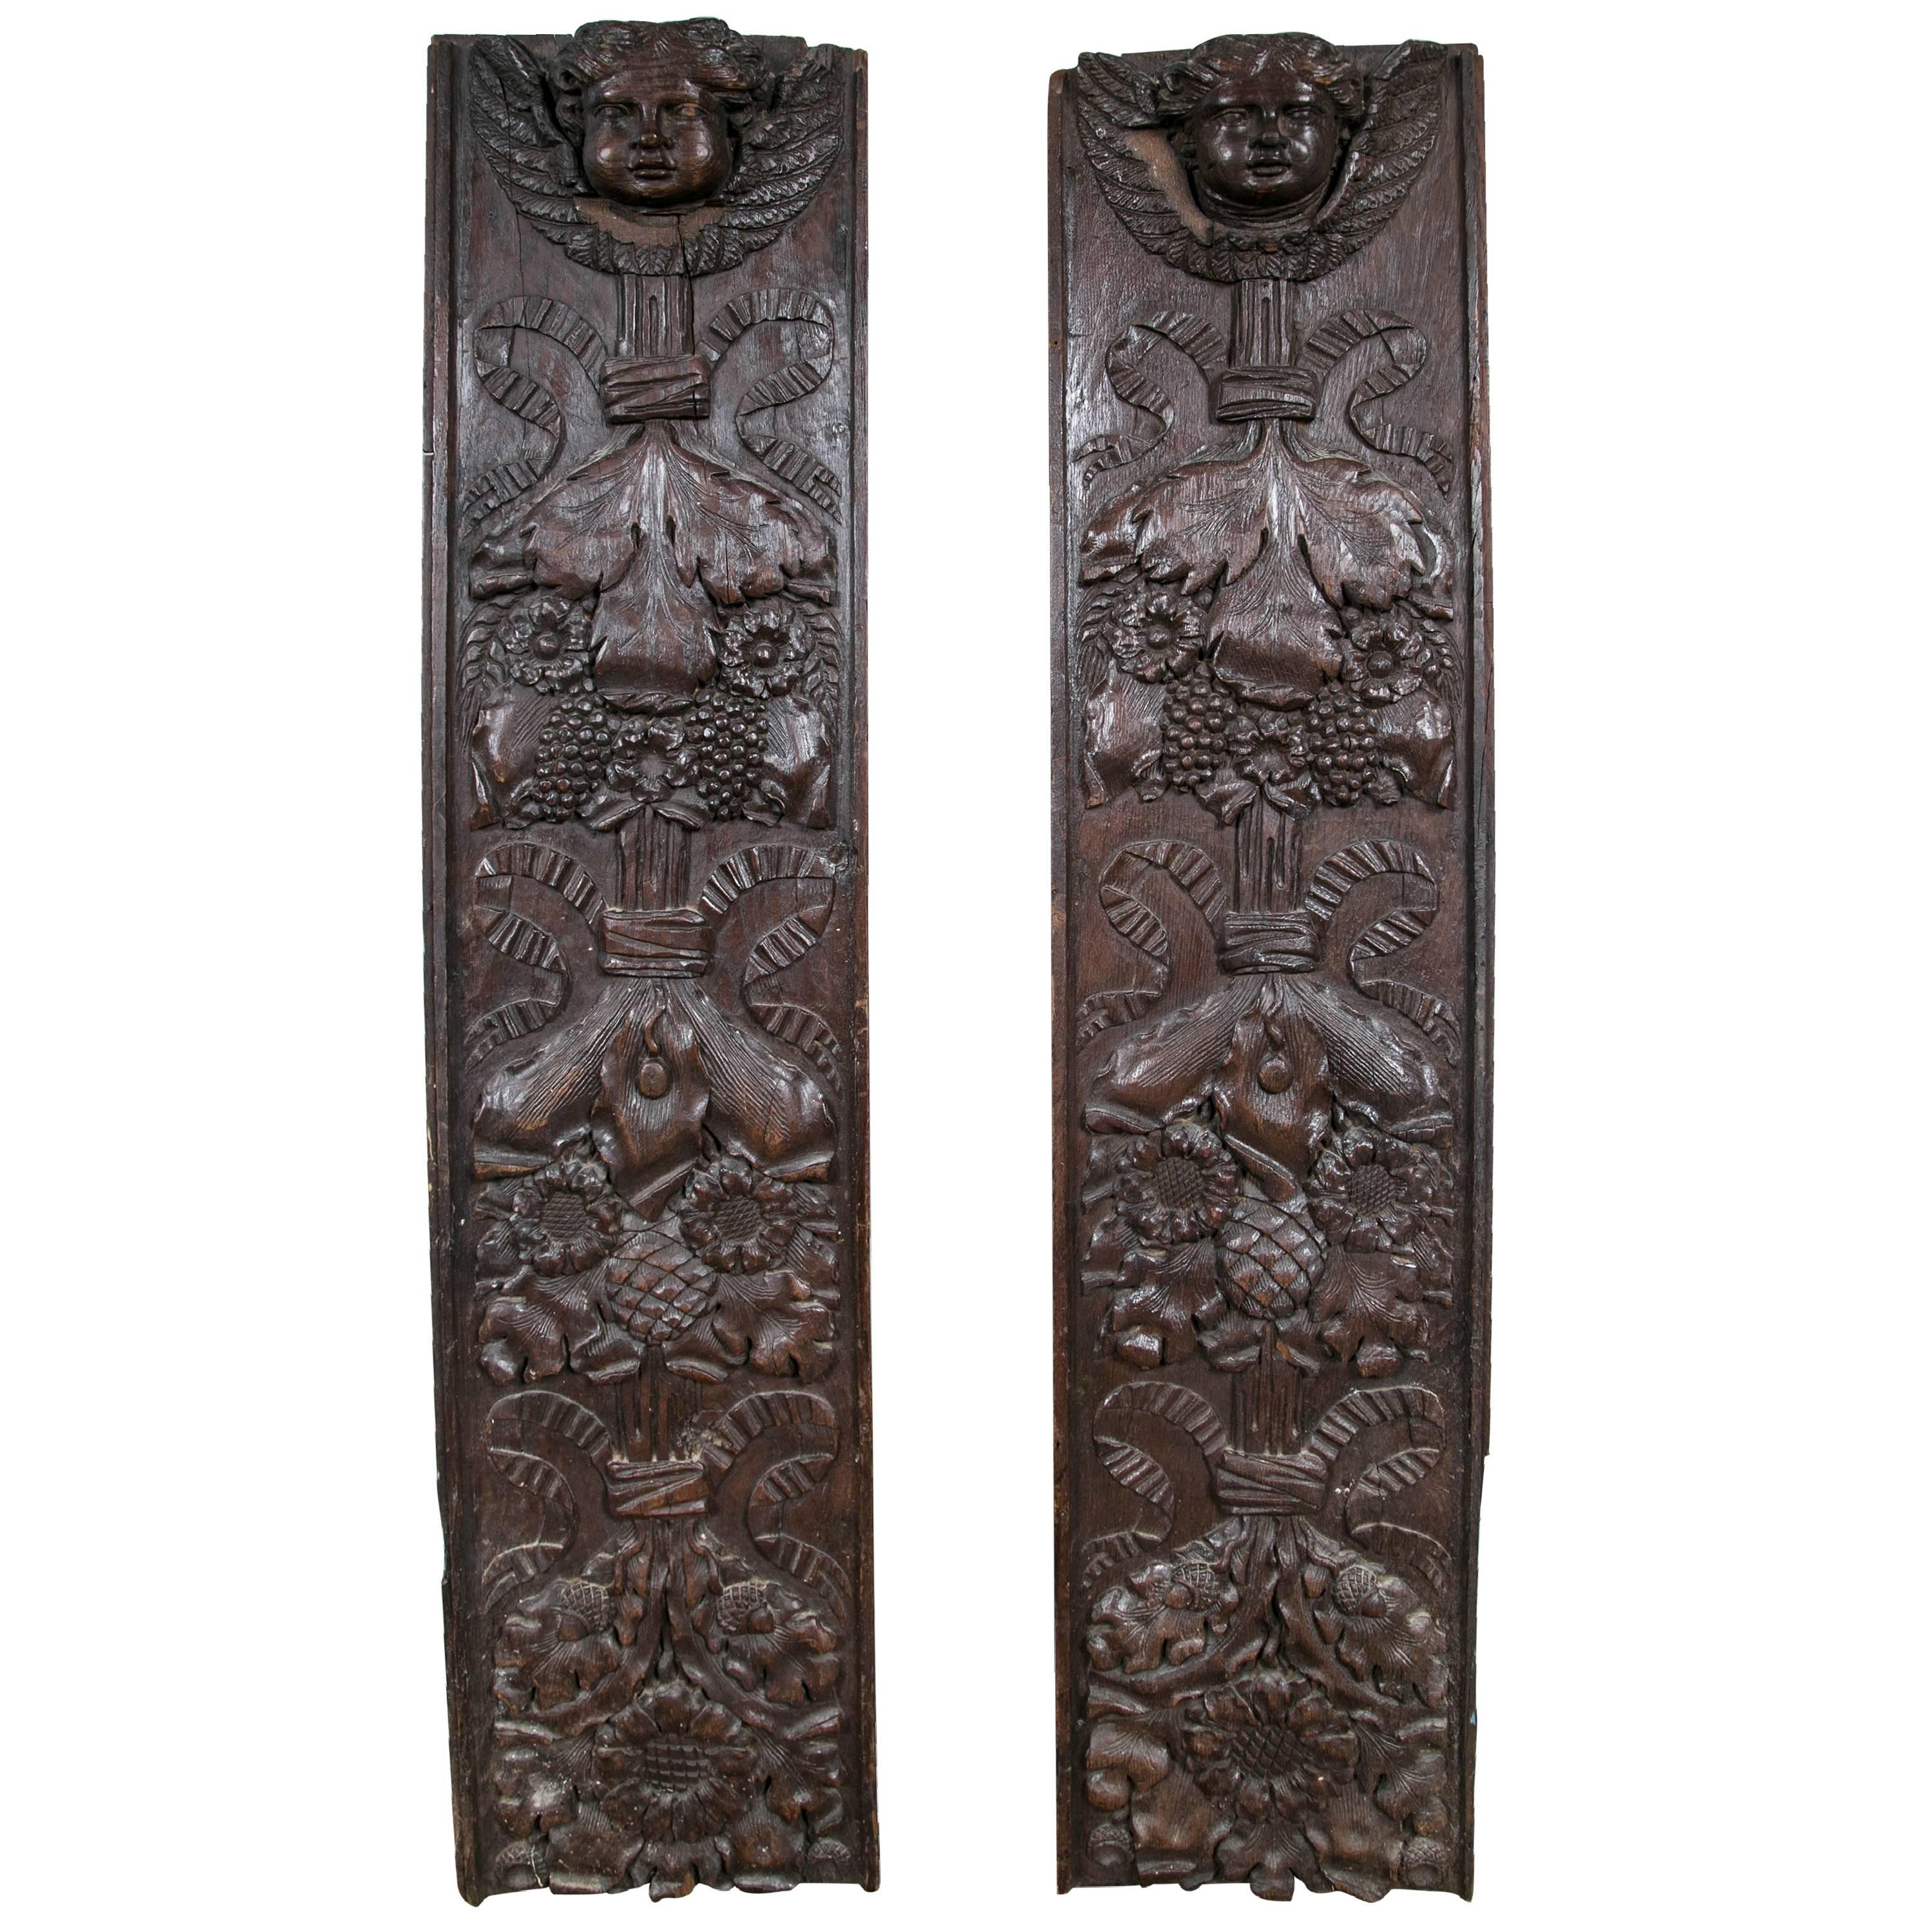 Pair Antique Carved Wood Decorative Panels